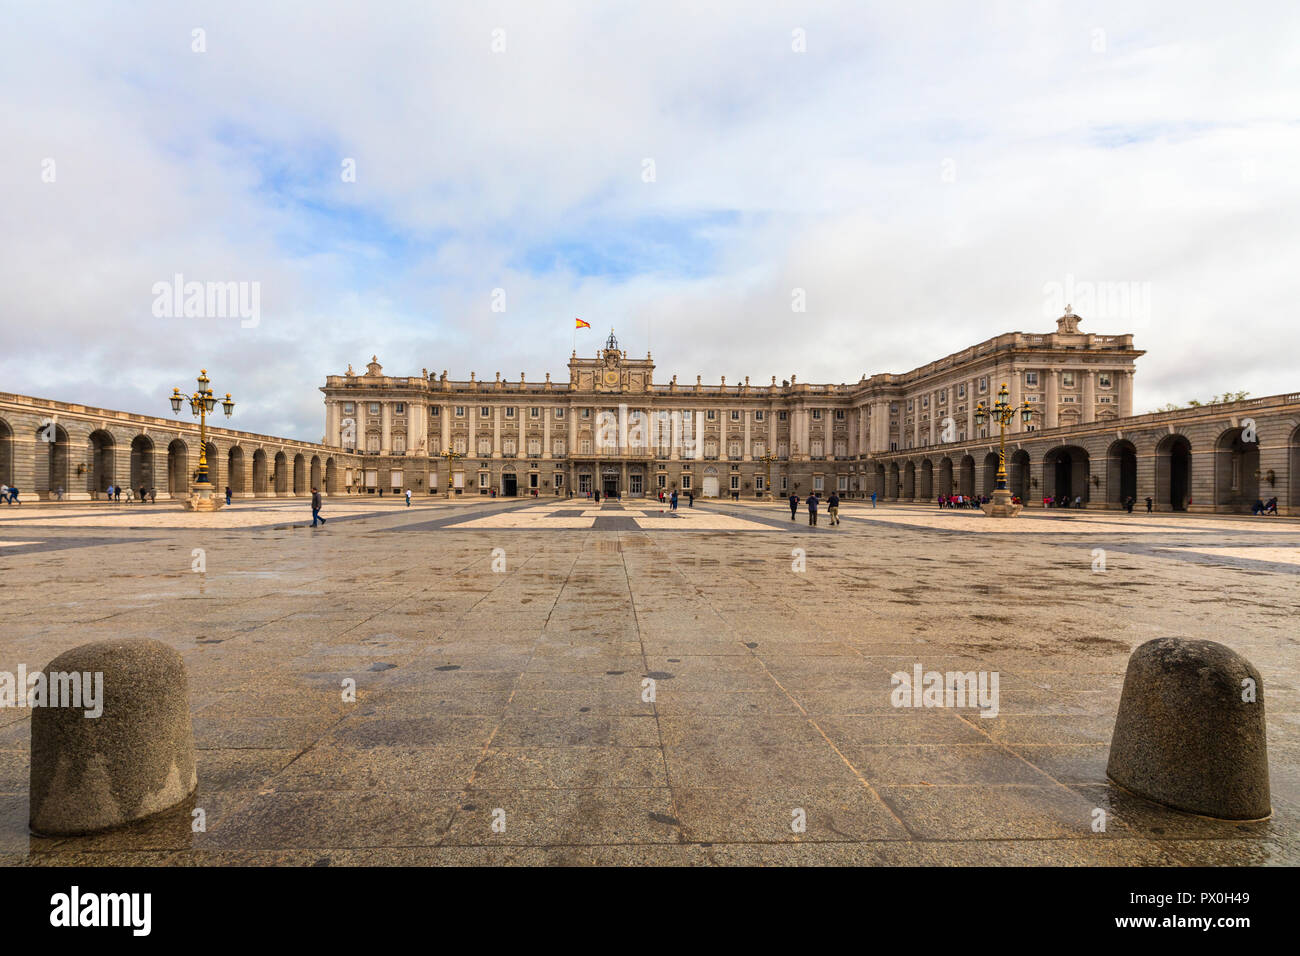 Royal Palace of Madrid (Palacio Real de Madrid), Plaza de la Armeria, Spain Stock Photo